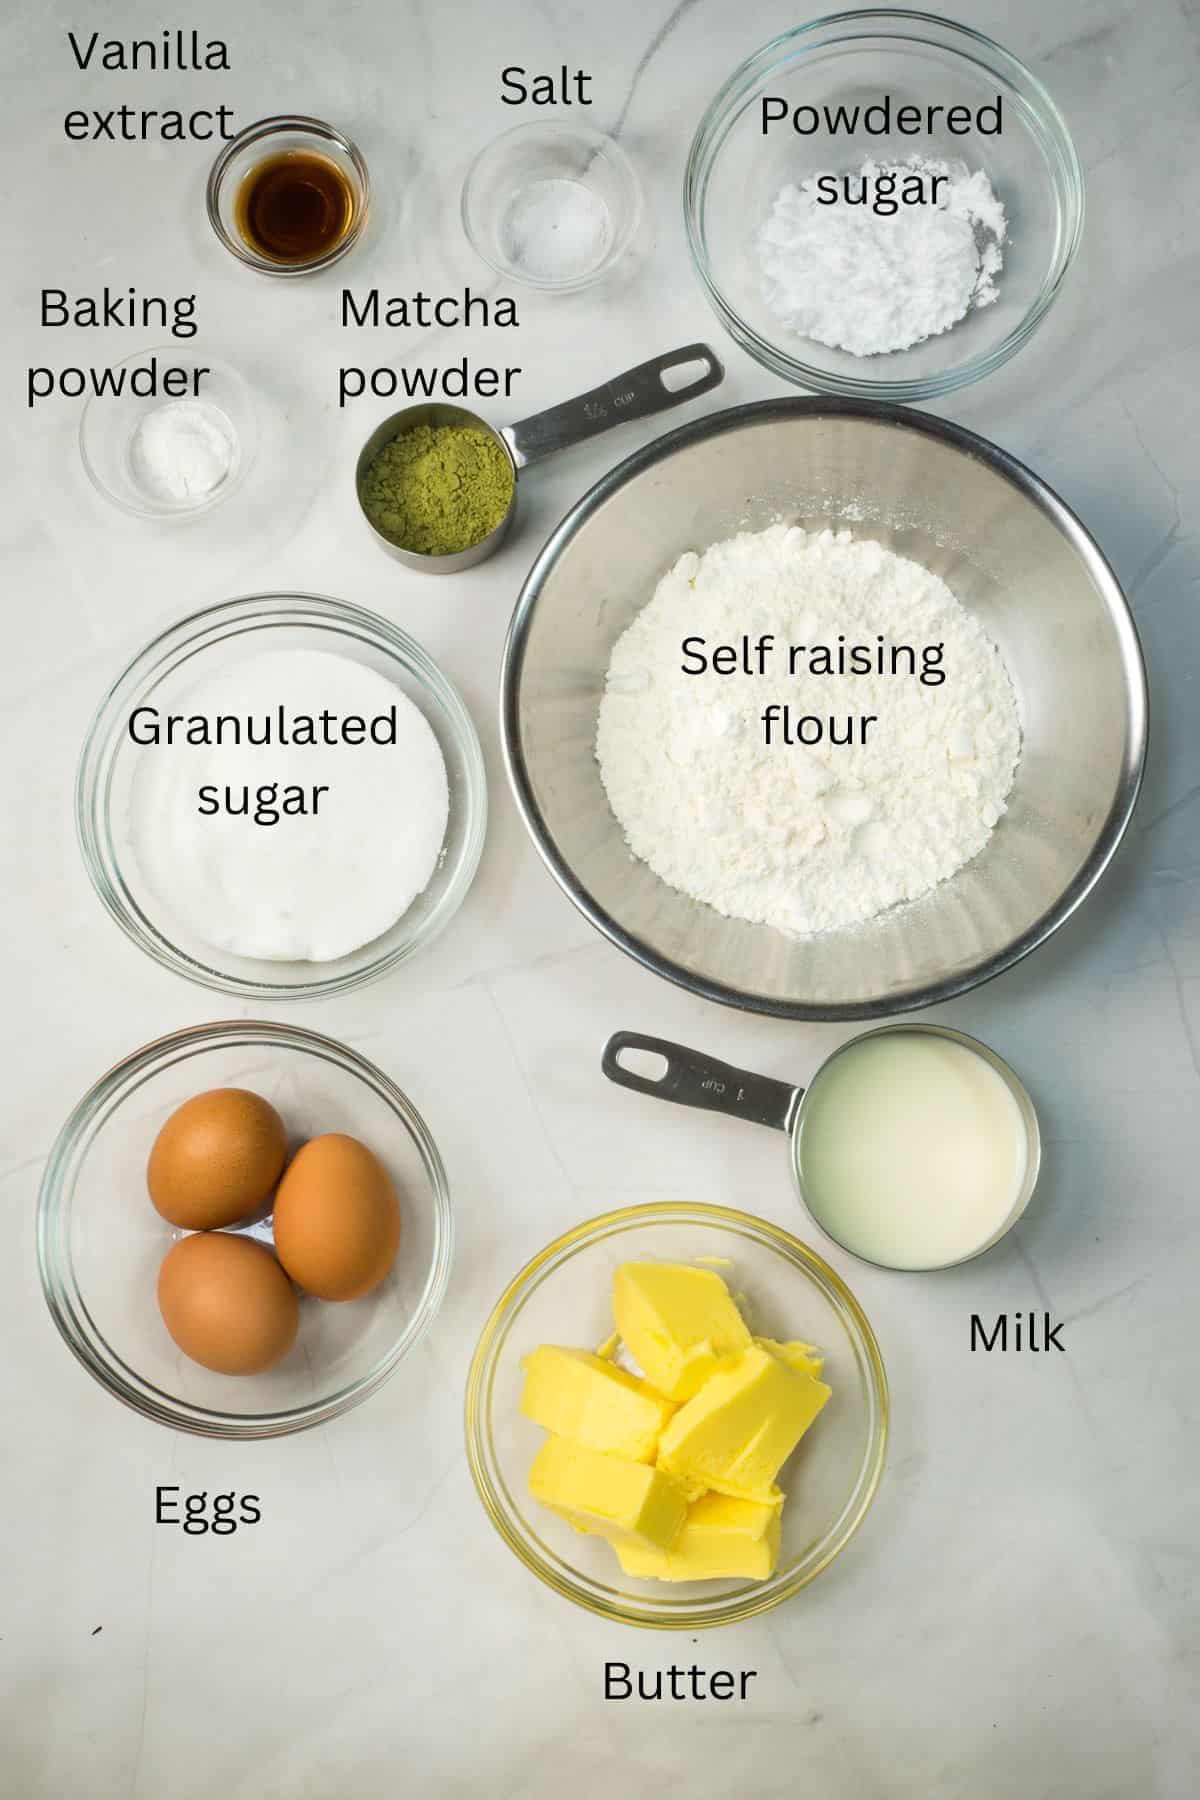 Self raising flour, granulated sugar, eggs, butter, matcha powder, salt, baking powder, milk, vanilla extract and powdered sugar against a marble background.